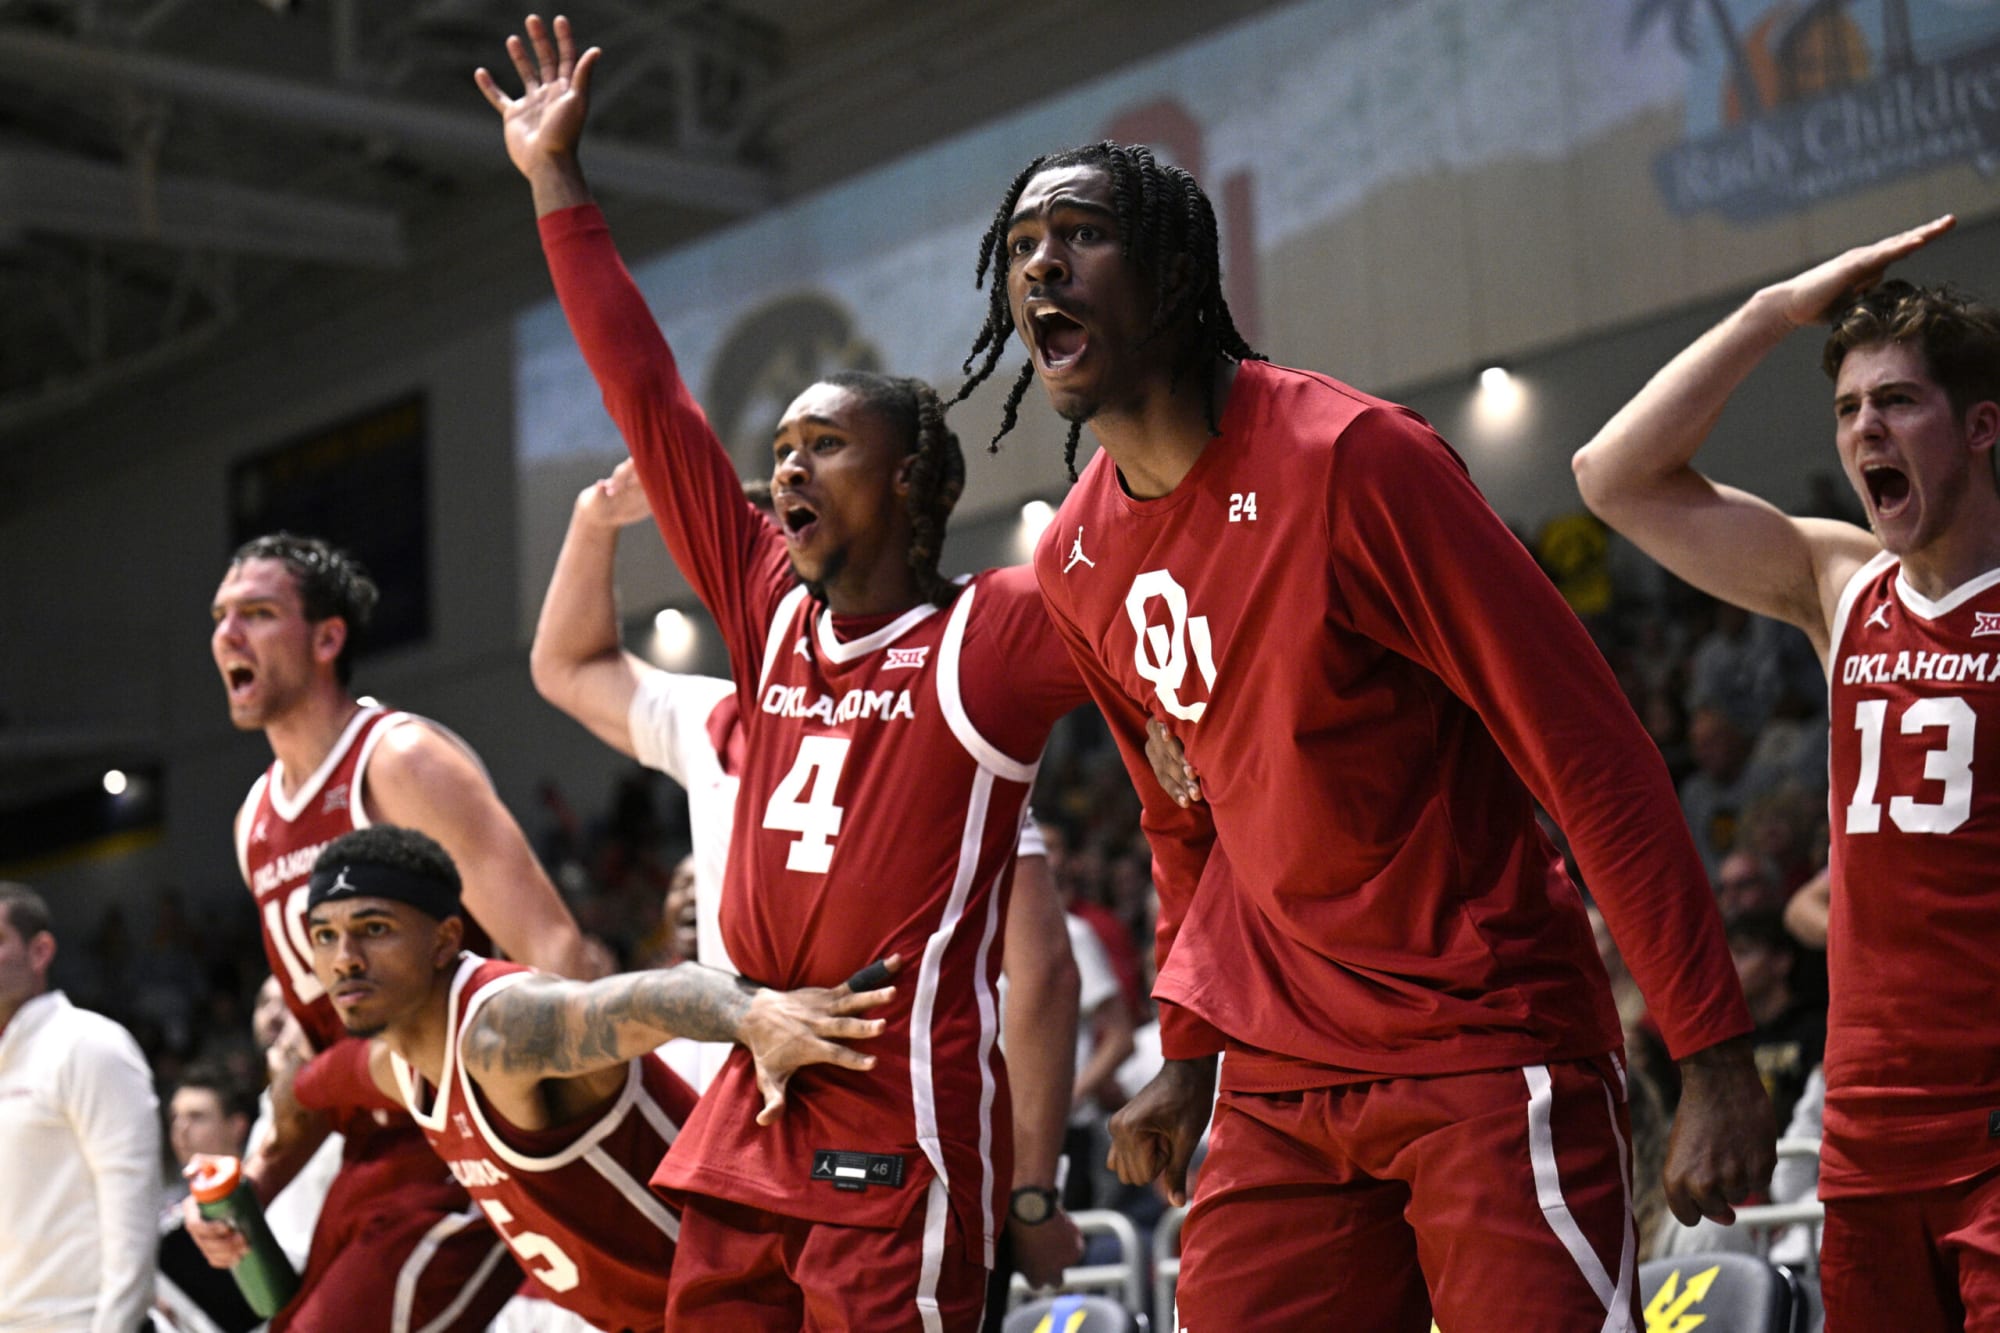 Oklahoma basketball: Sooner men jump to No. 19 in Associated Press Top 25